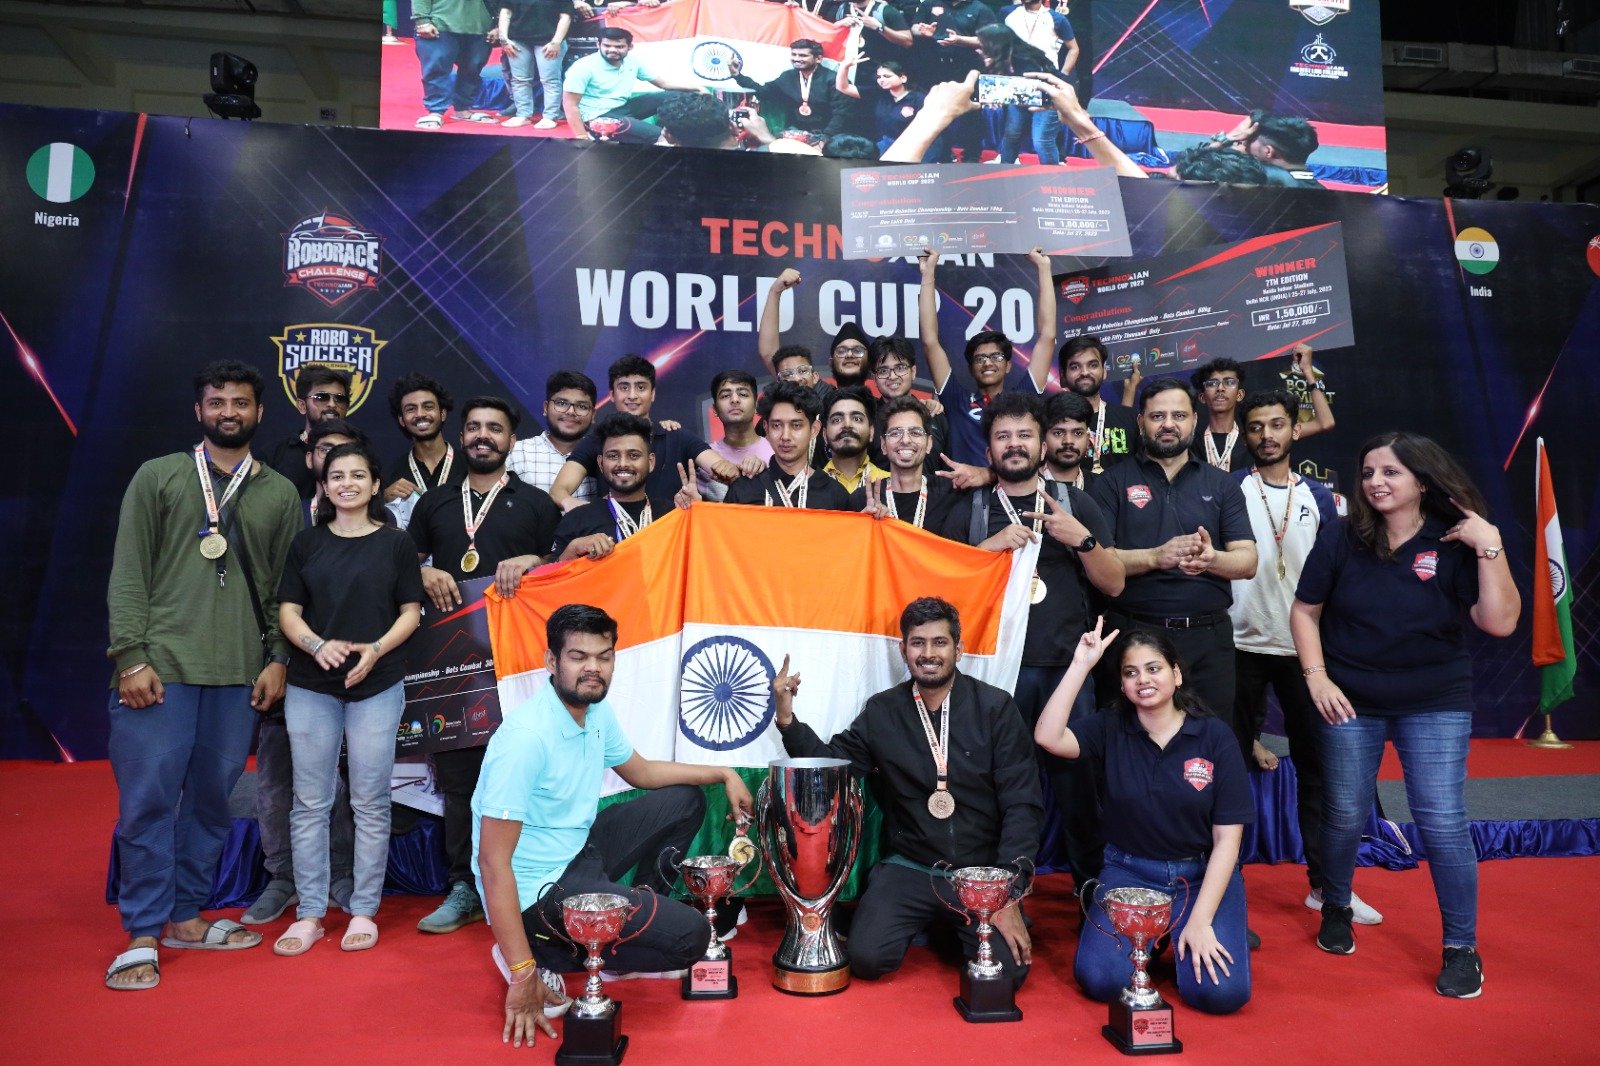 Team Xenon and Team Invincible Clinch TechnoXian World Cup Championship Title in a Remarkable Robotics Showdown